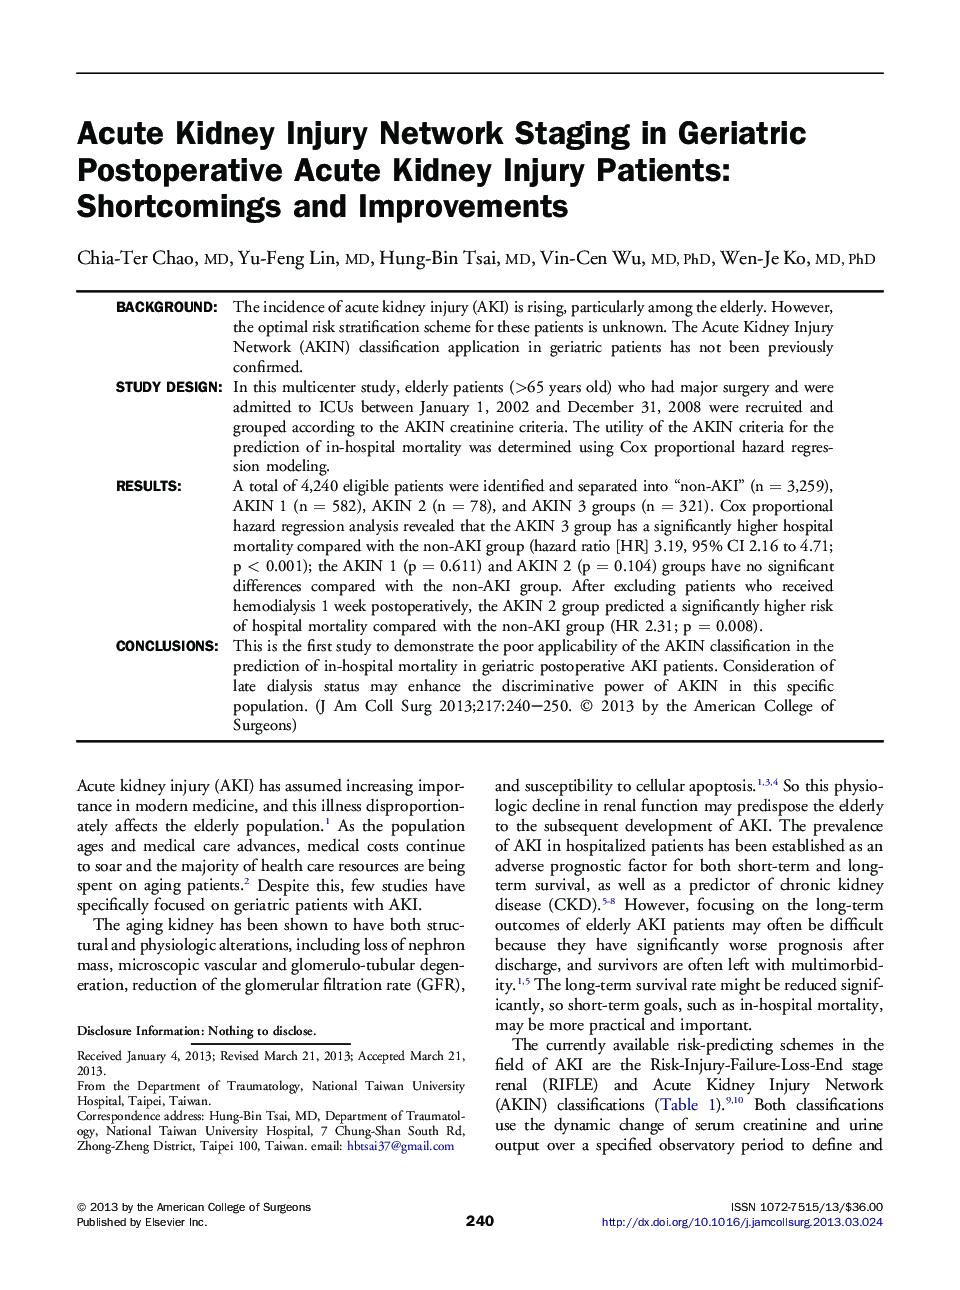 Acute Kidney Injury Network Staging in Geriatric Postoperative Acute Kidney Injury Patients: Shortcomings and Improvements 